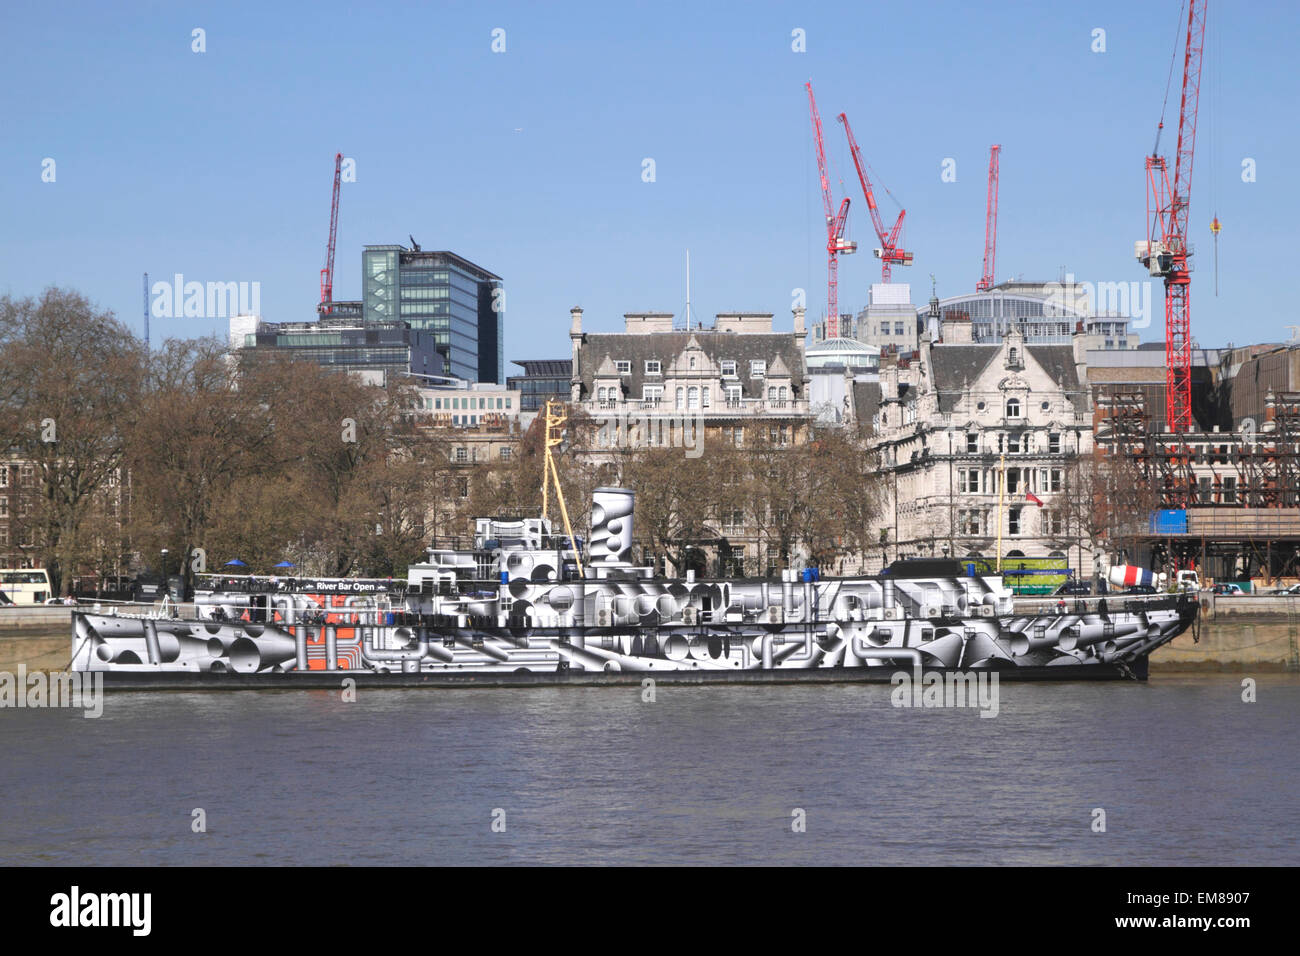 HMS President am Londoner Victoria Embankment Dazzle Camouflage April 2015 Stockfoto